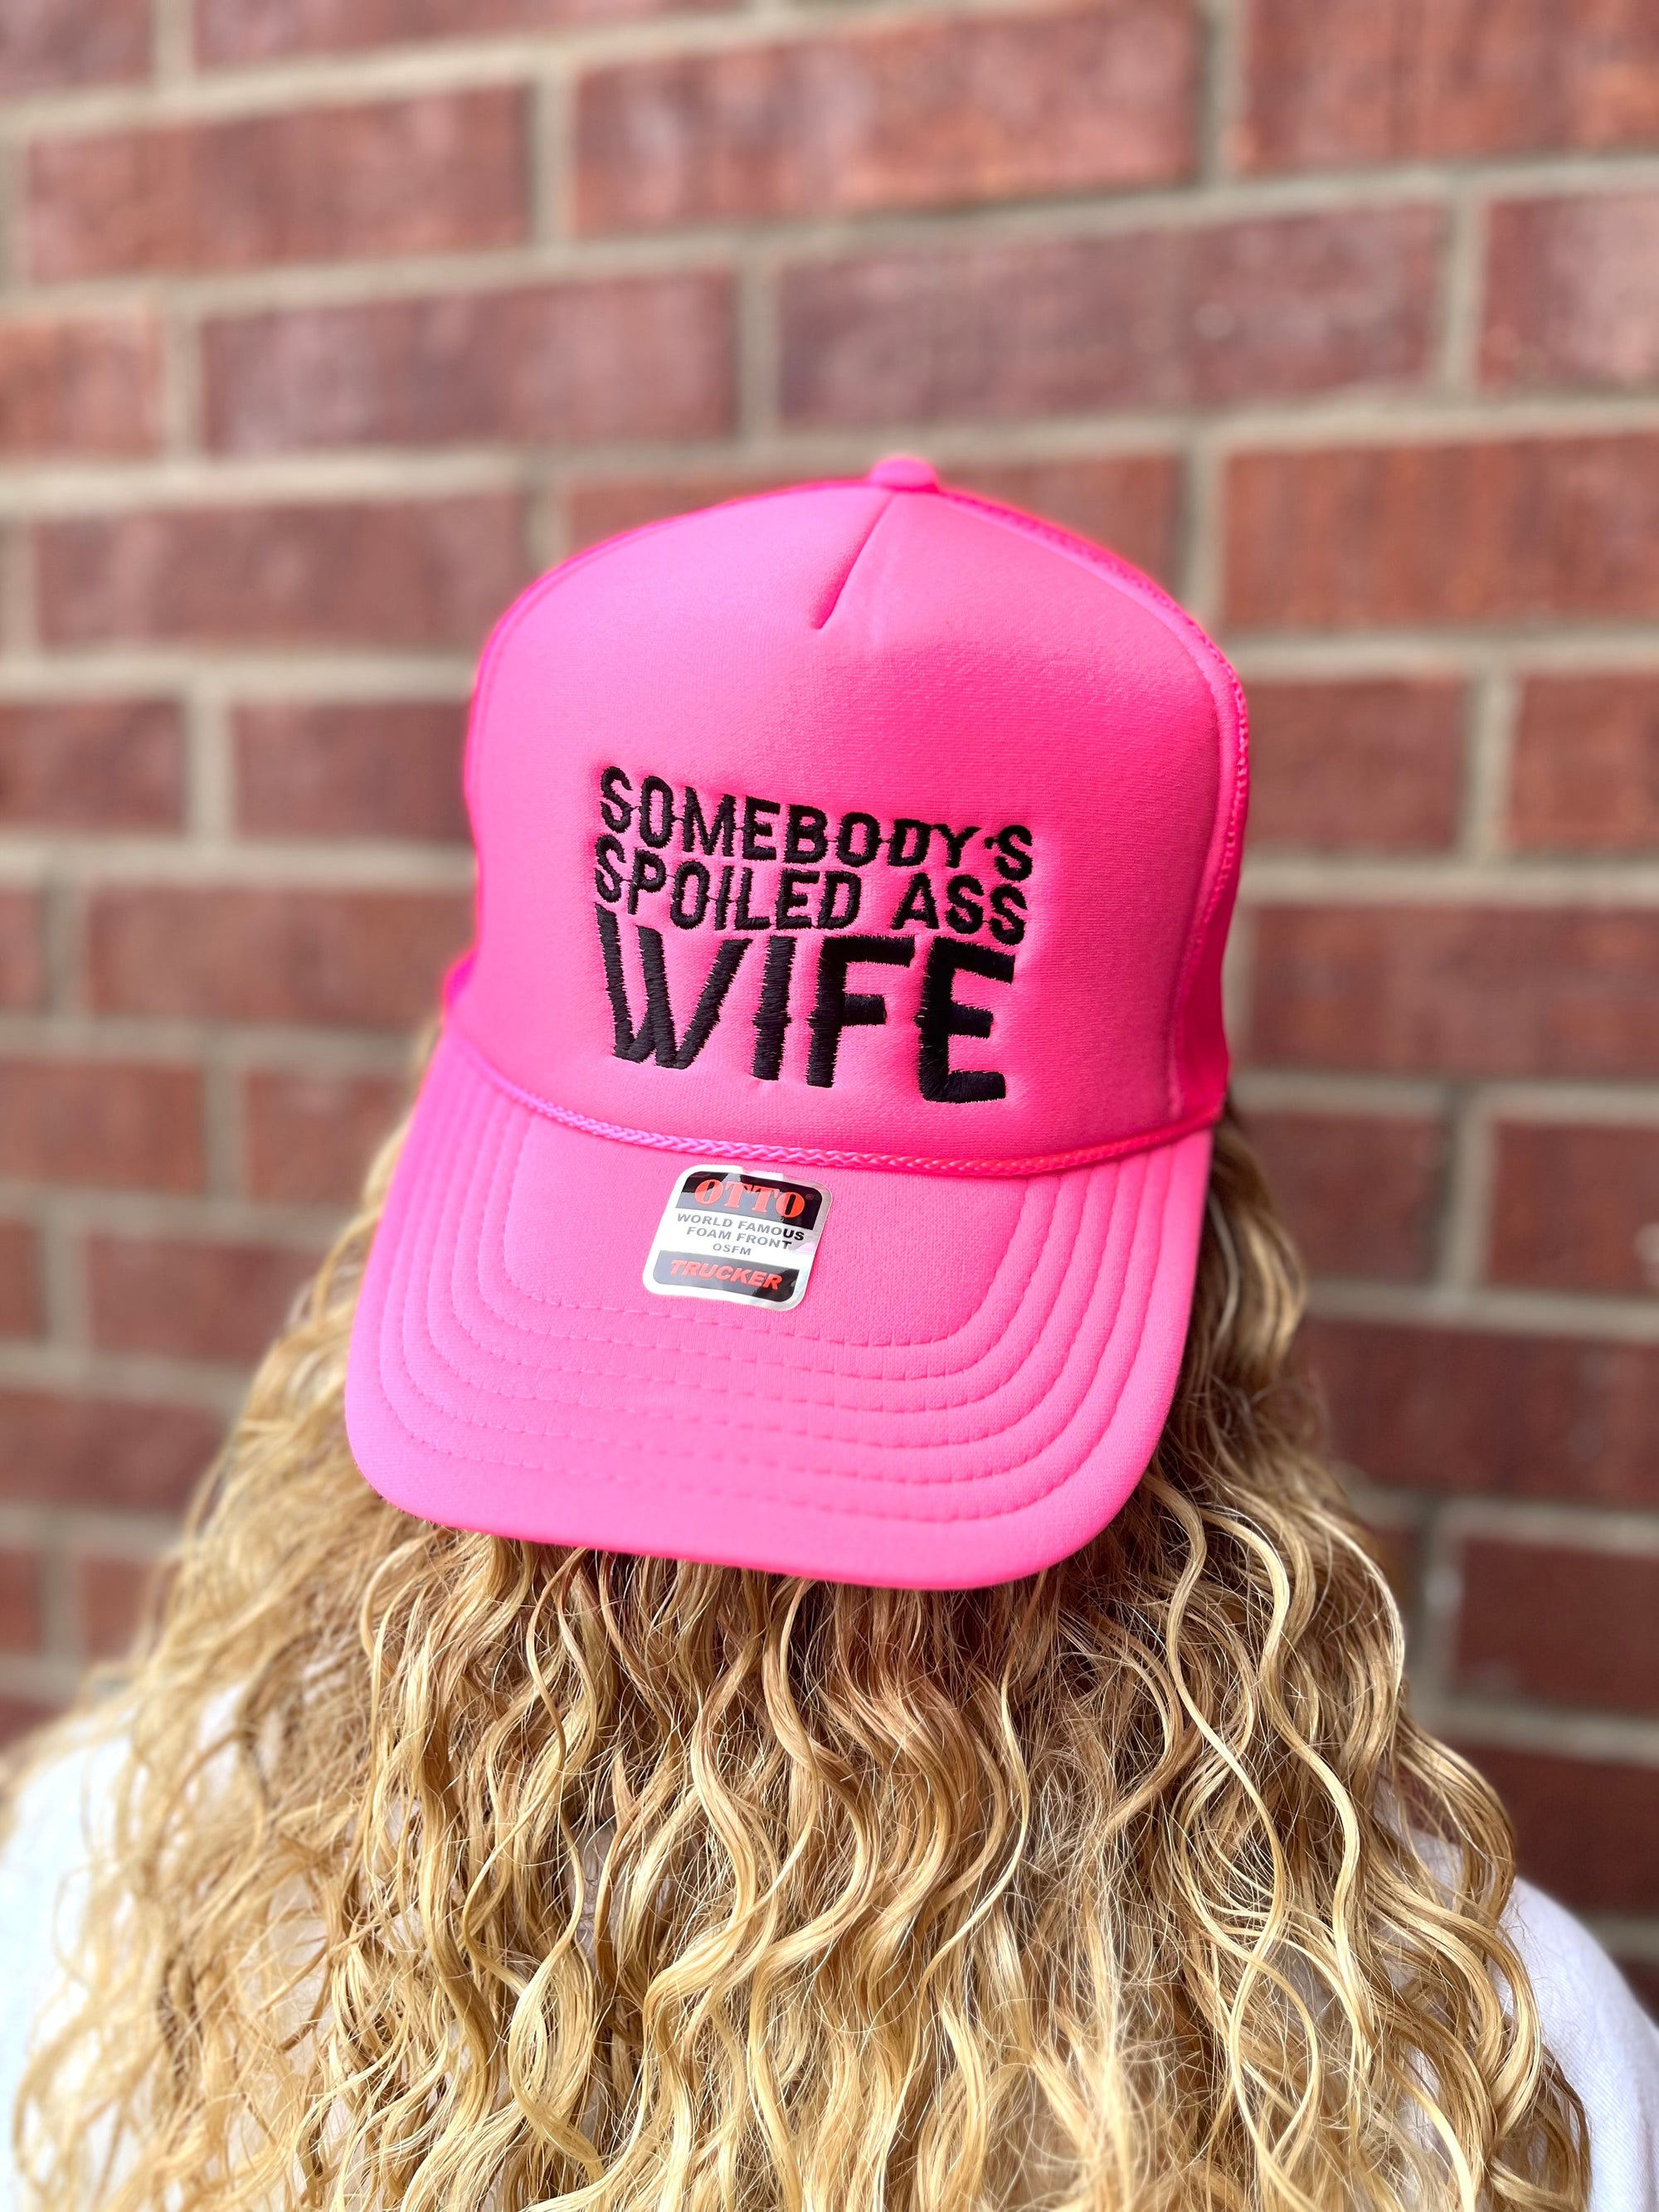 Spoiled Ass Wife Trucker Hat